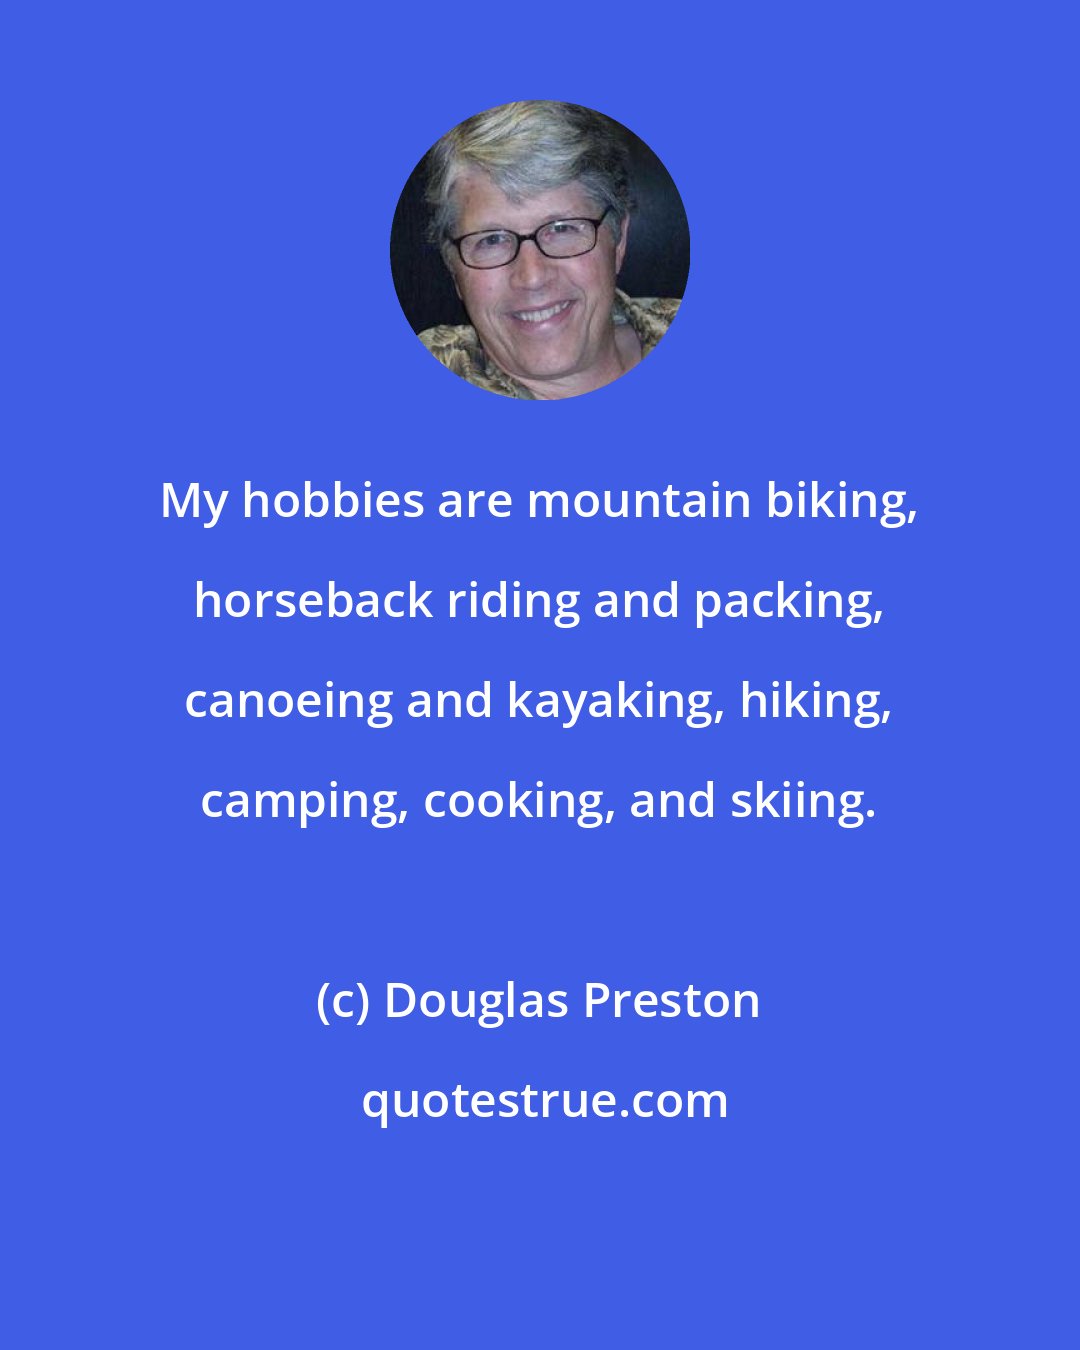 Douglas Preston: My hobbies are mountain biking, horseback riding and packing, canoeing and kayaking, hiking, camping, cooking, and skiing.